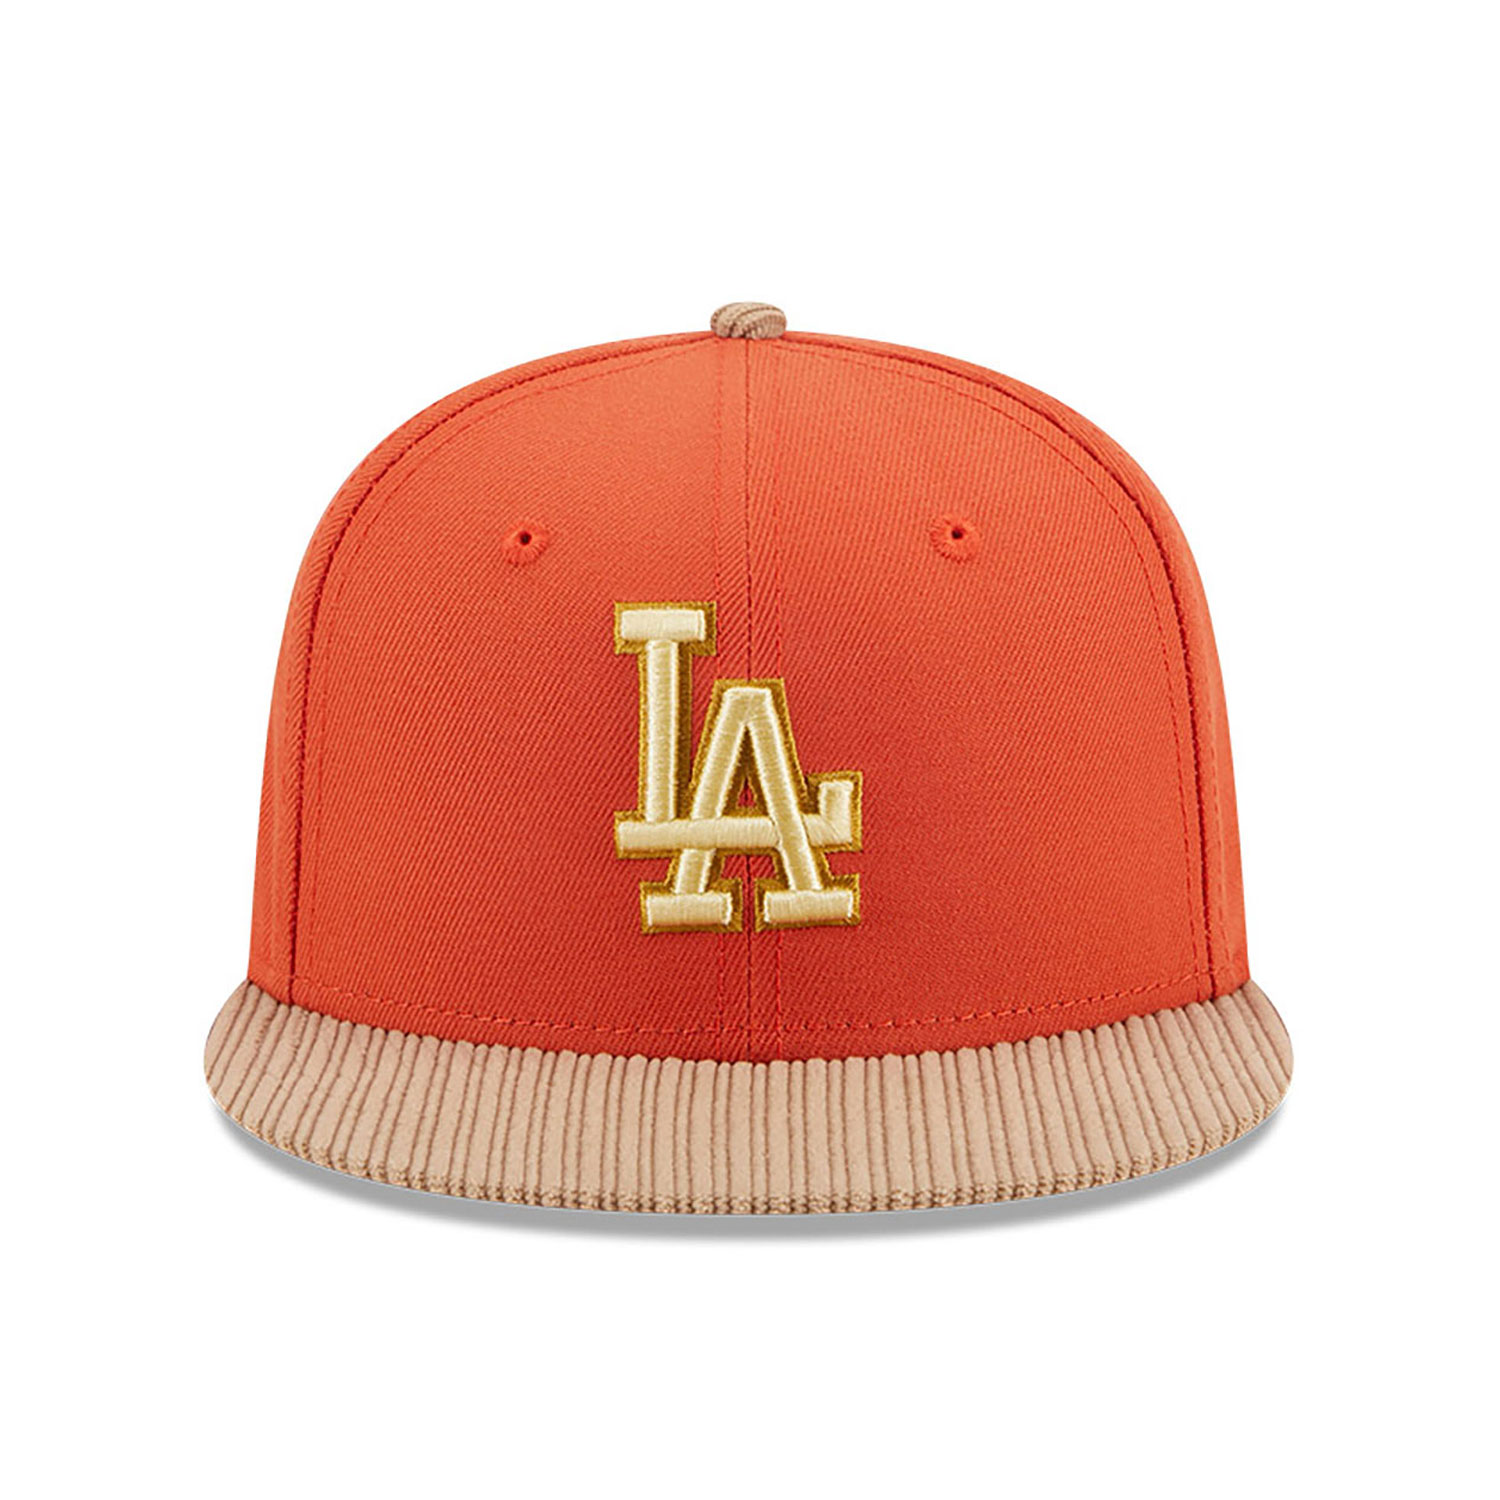 LA Dodgers MLB Autumn Wheat Dark Orange 9FIFTY Snapback Cap